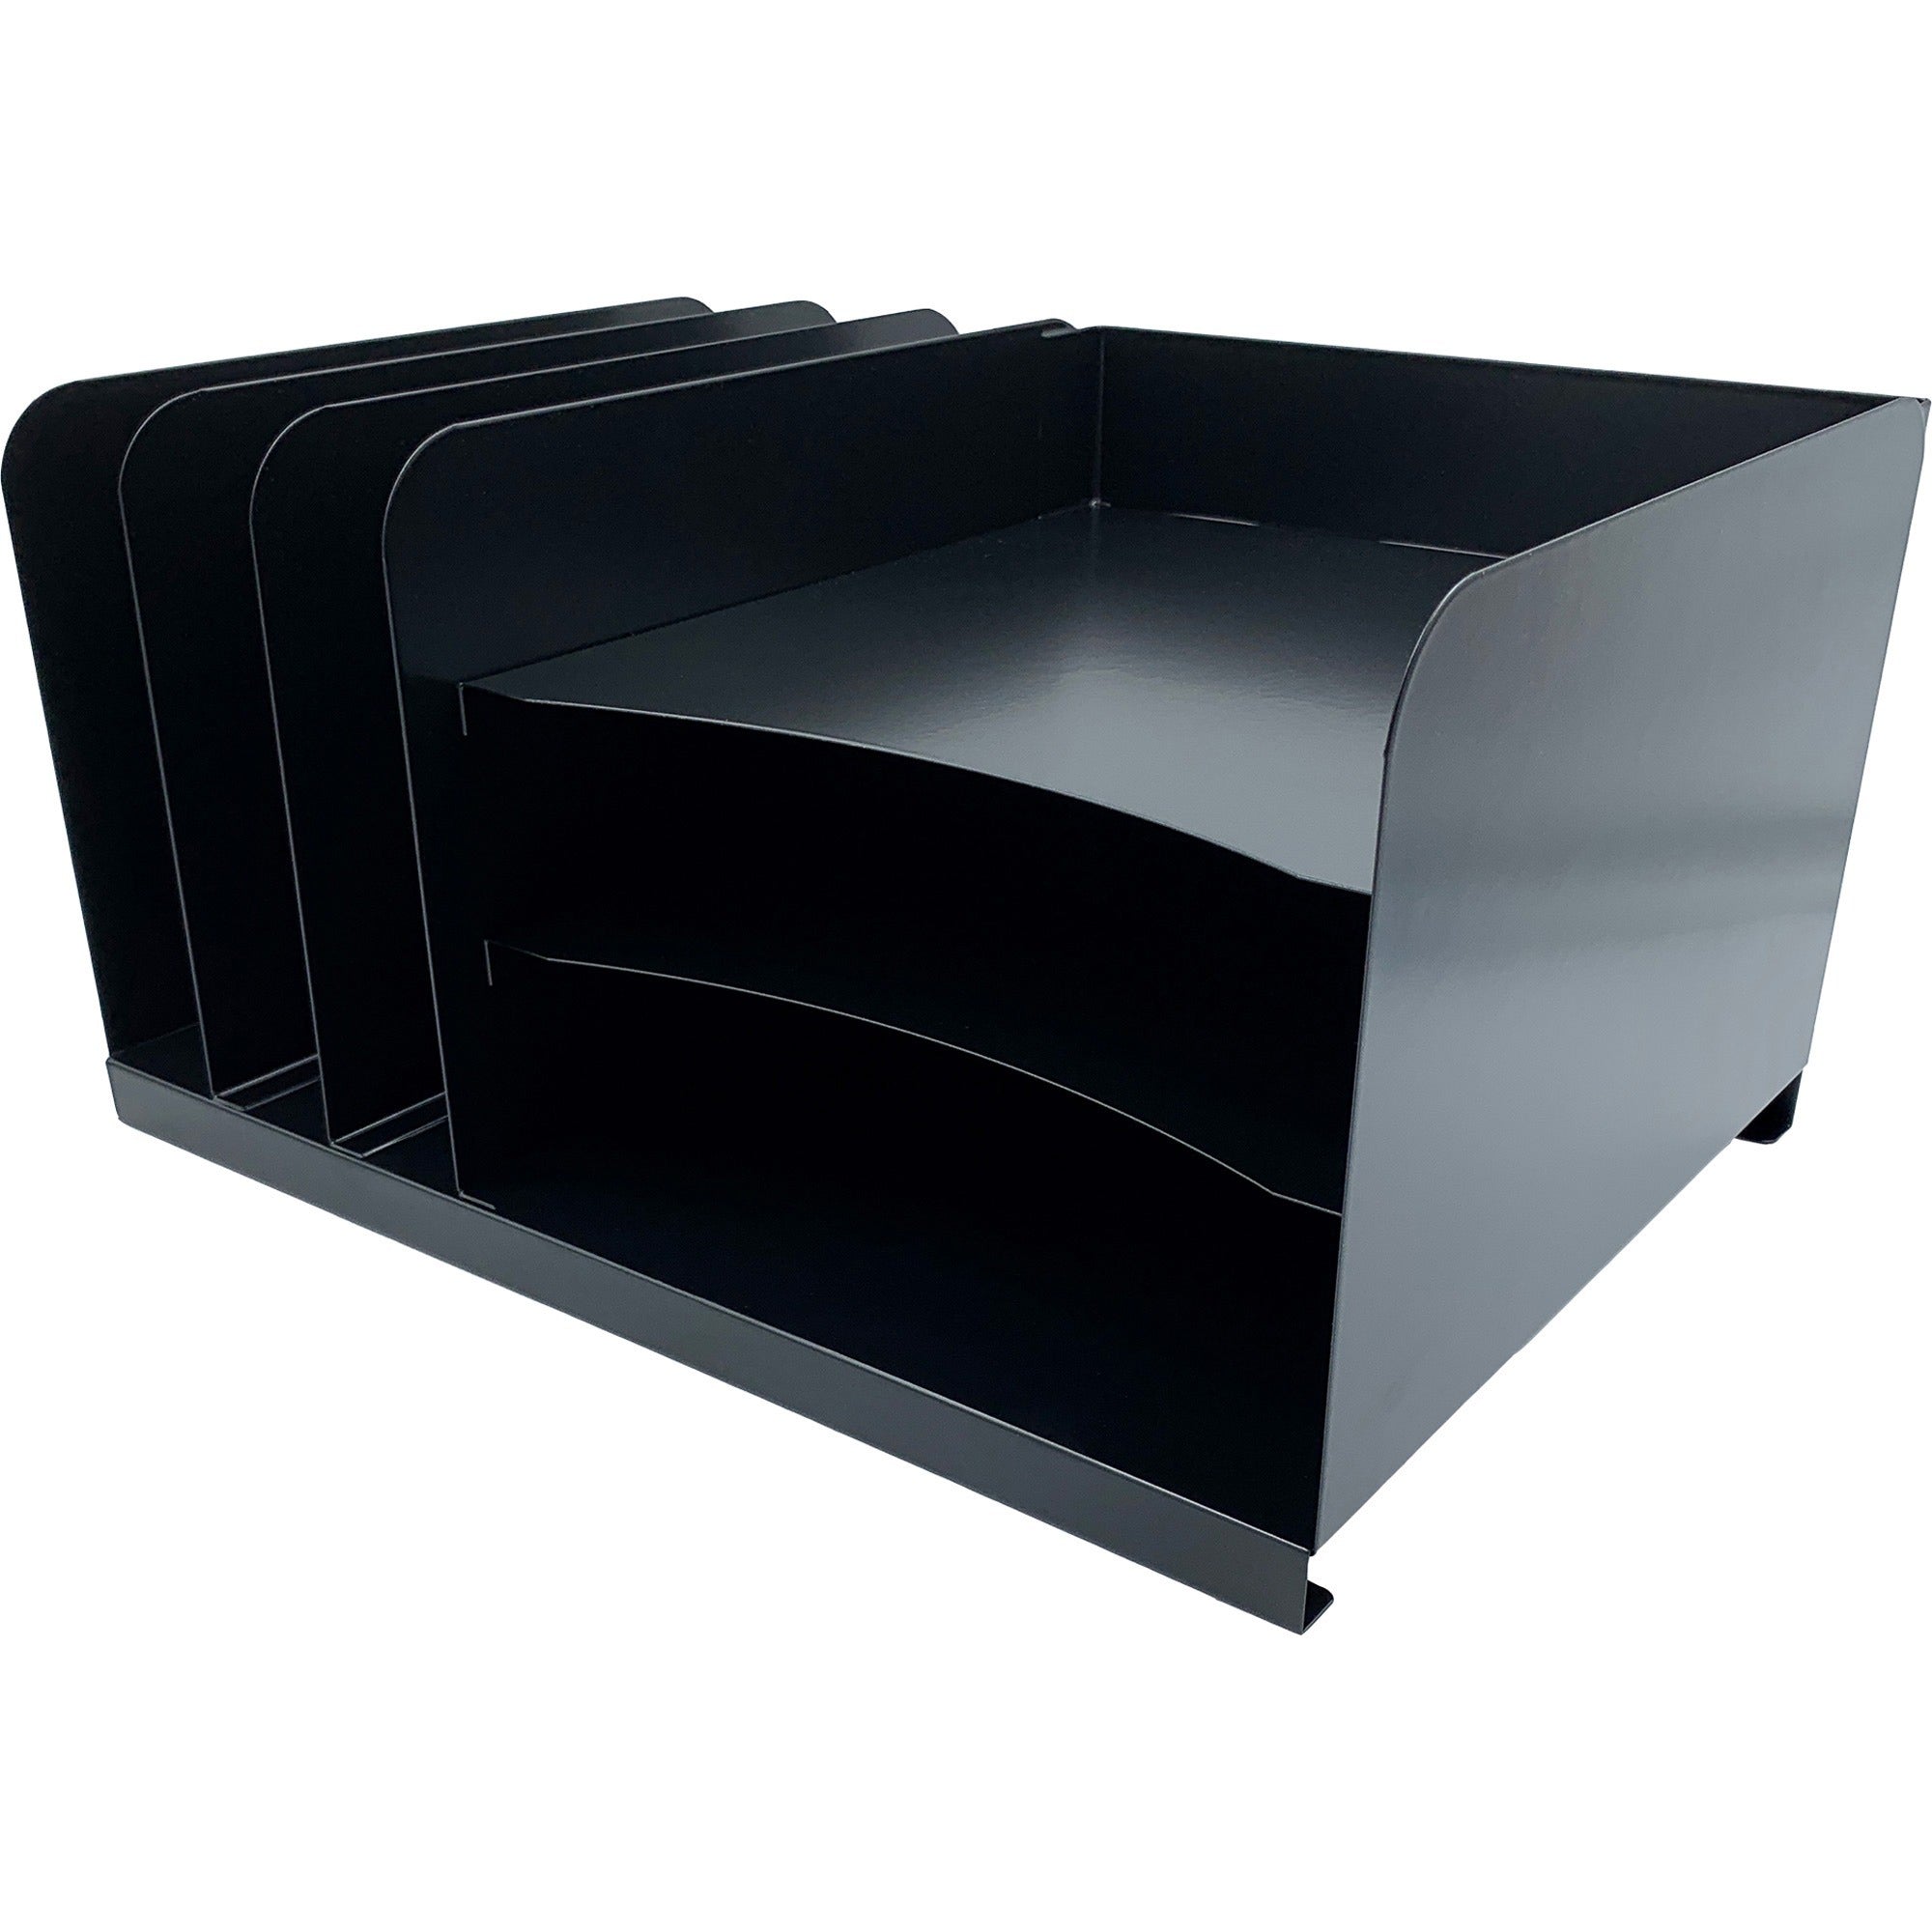 huron-combo-slots-desk-organizer-6-compartments-horizontal-vertical-8-height-x-15-width-x-11-depth-durable-black-steel-1-each_hurhasz0148 - 1